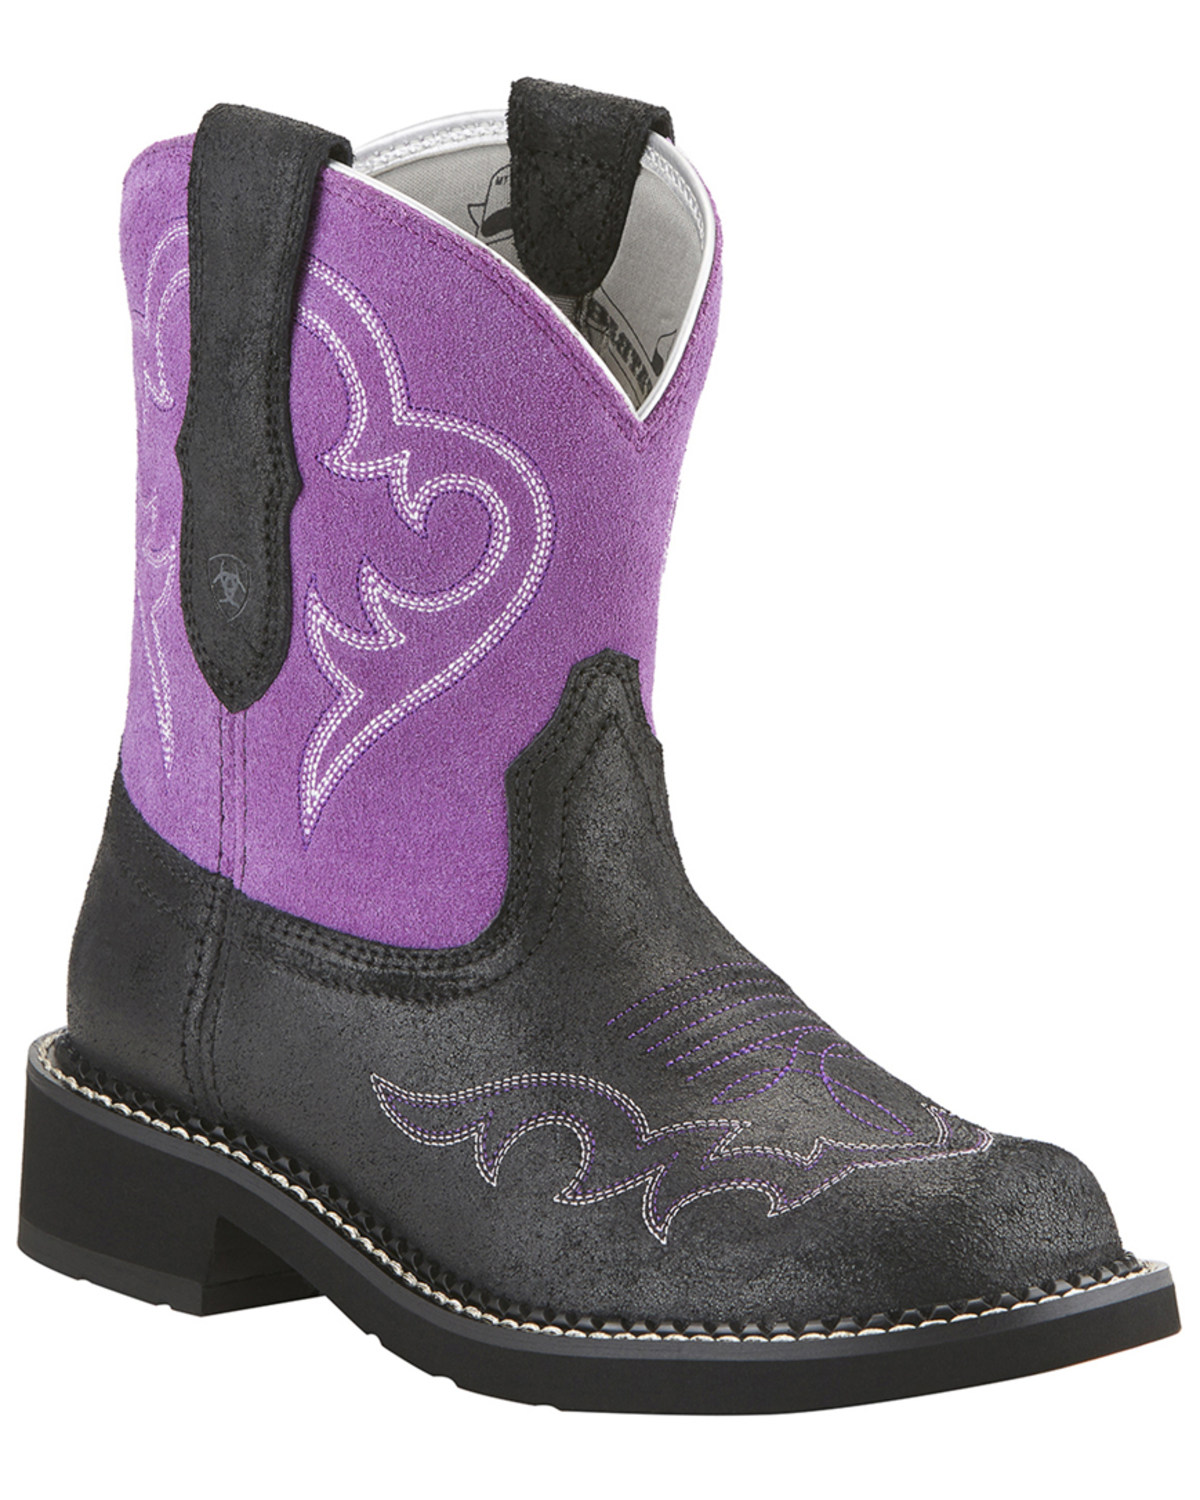 purple riding boots